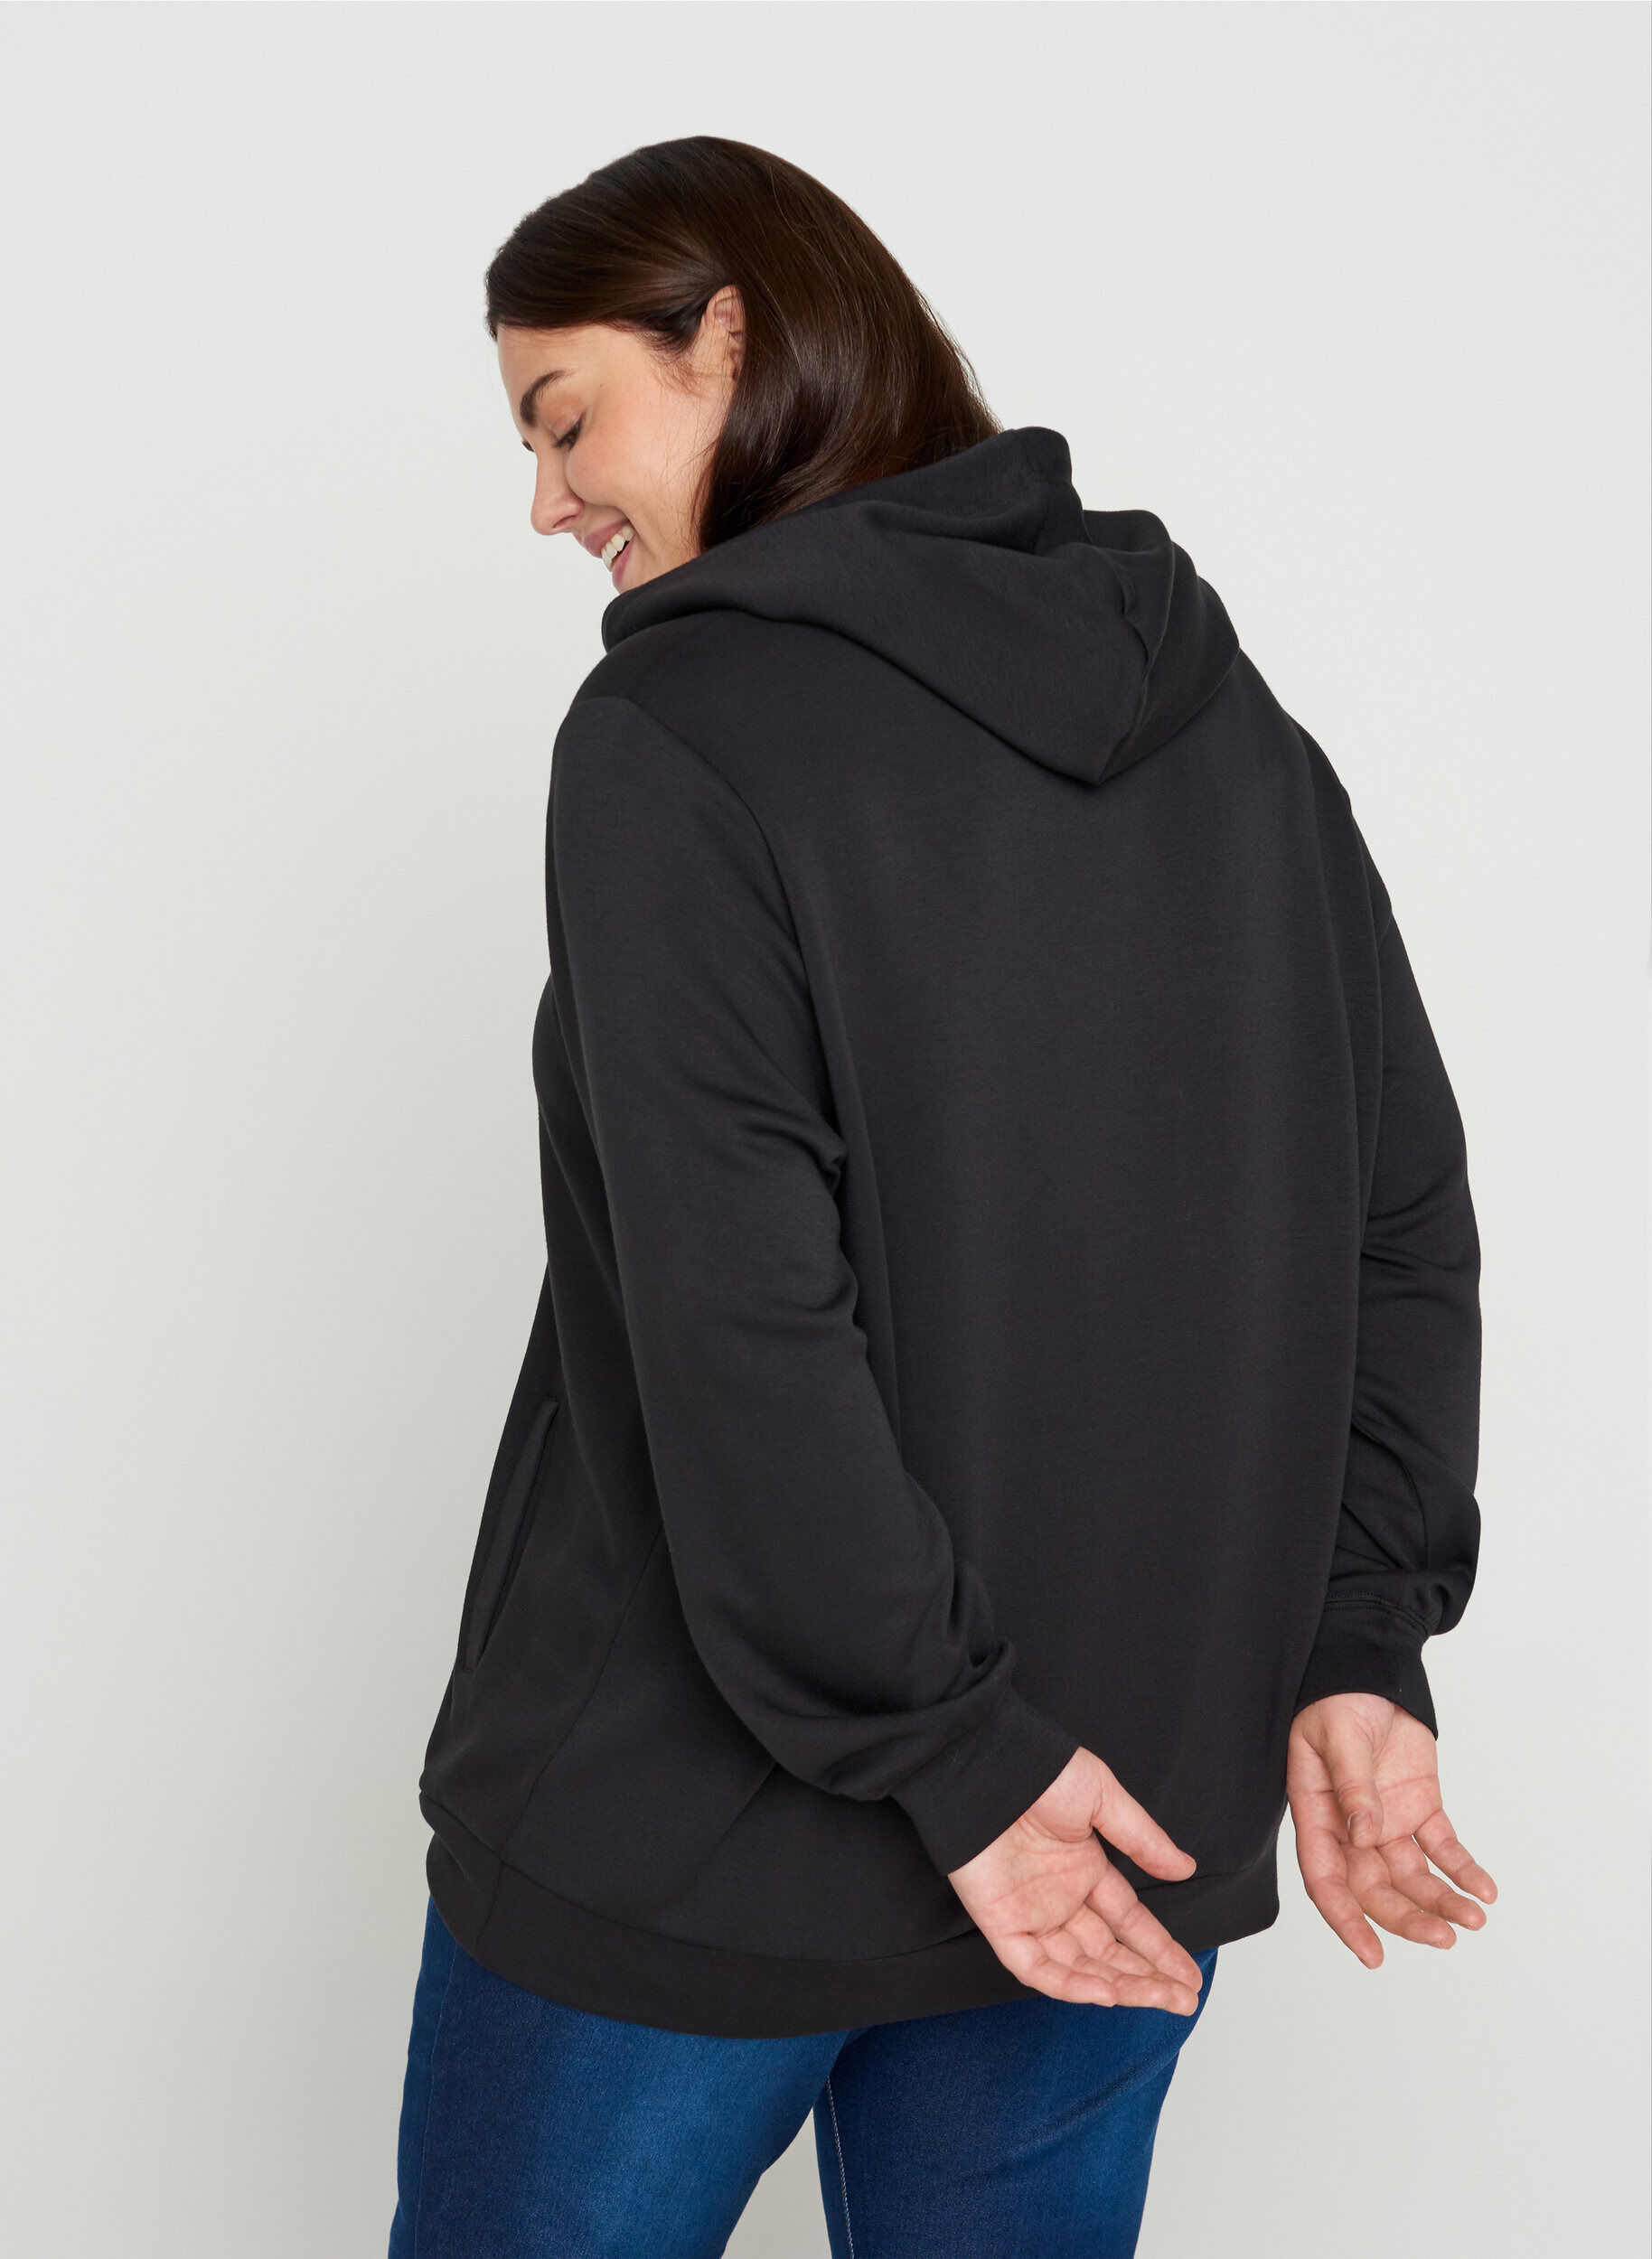 Sweatshirt with pockets and hood - Black - Sz. 42-60 - Zizzifashion